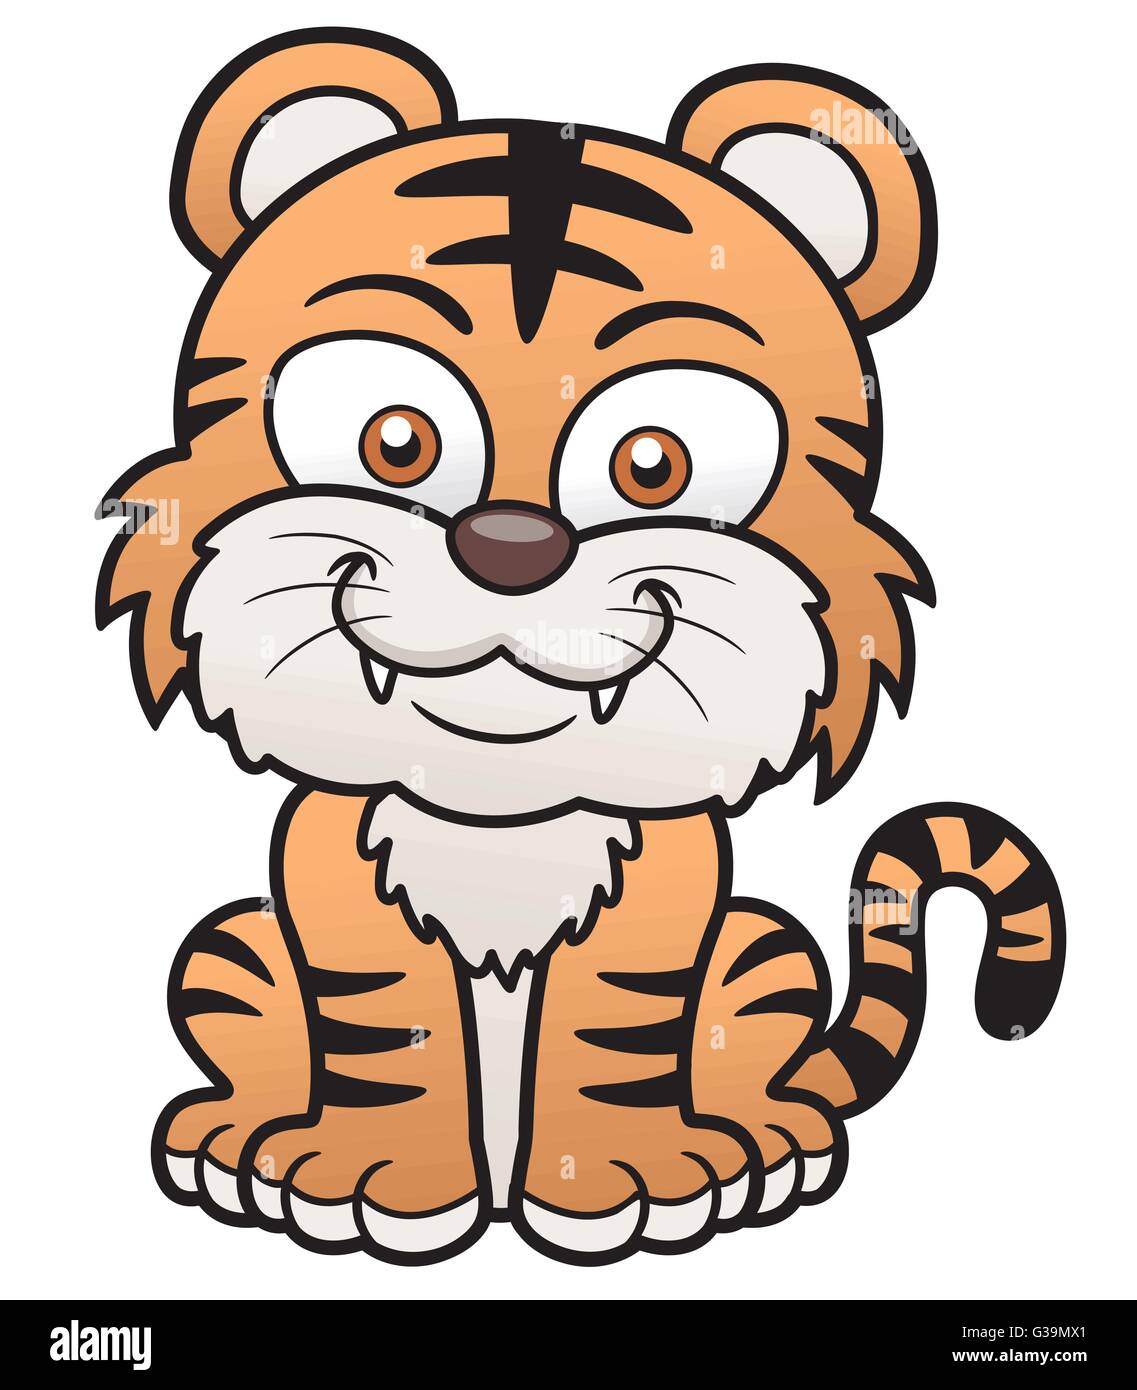 Dibujos animados de tigre fotografías e imágenes de alta resolución - Alamy